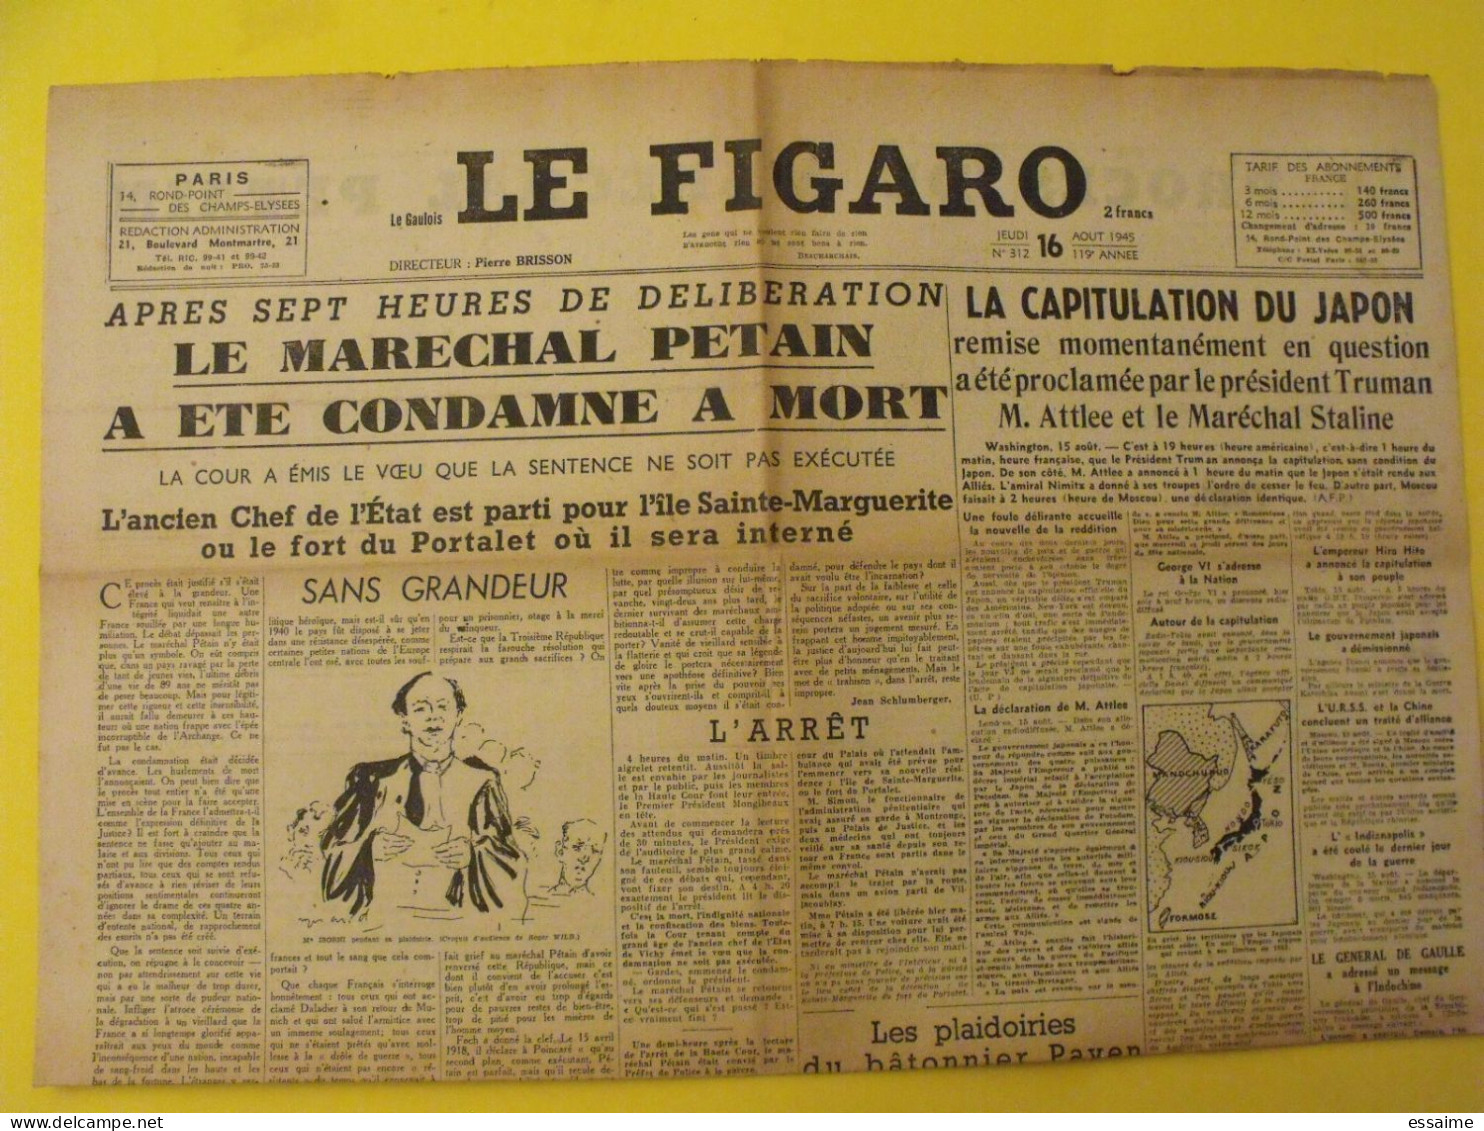 6 n° Le Figaro de 1945. bombe atomique Nagasaki Hiroshima De Brinon Darnand épuration Pétain Mauriac capitulation Japon